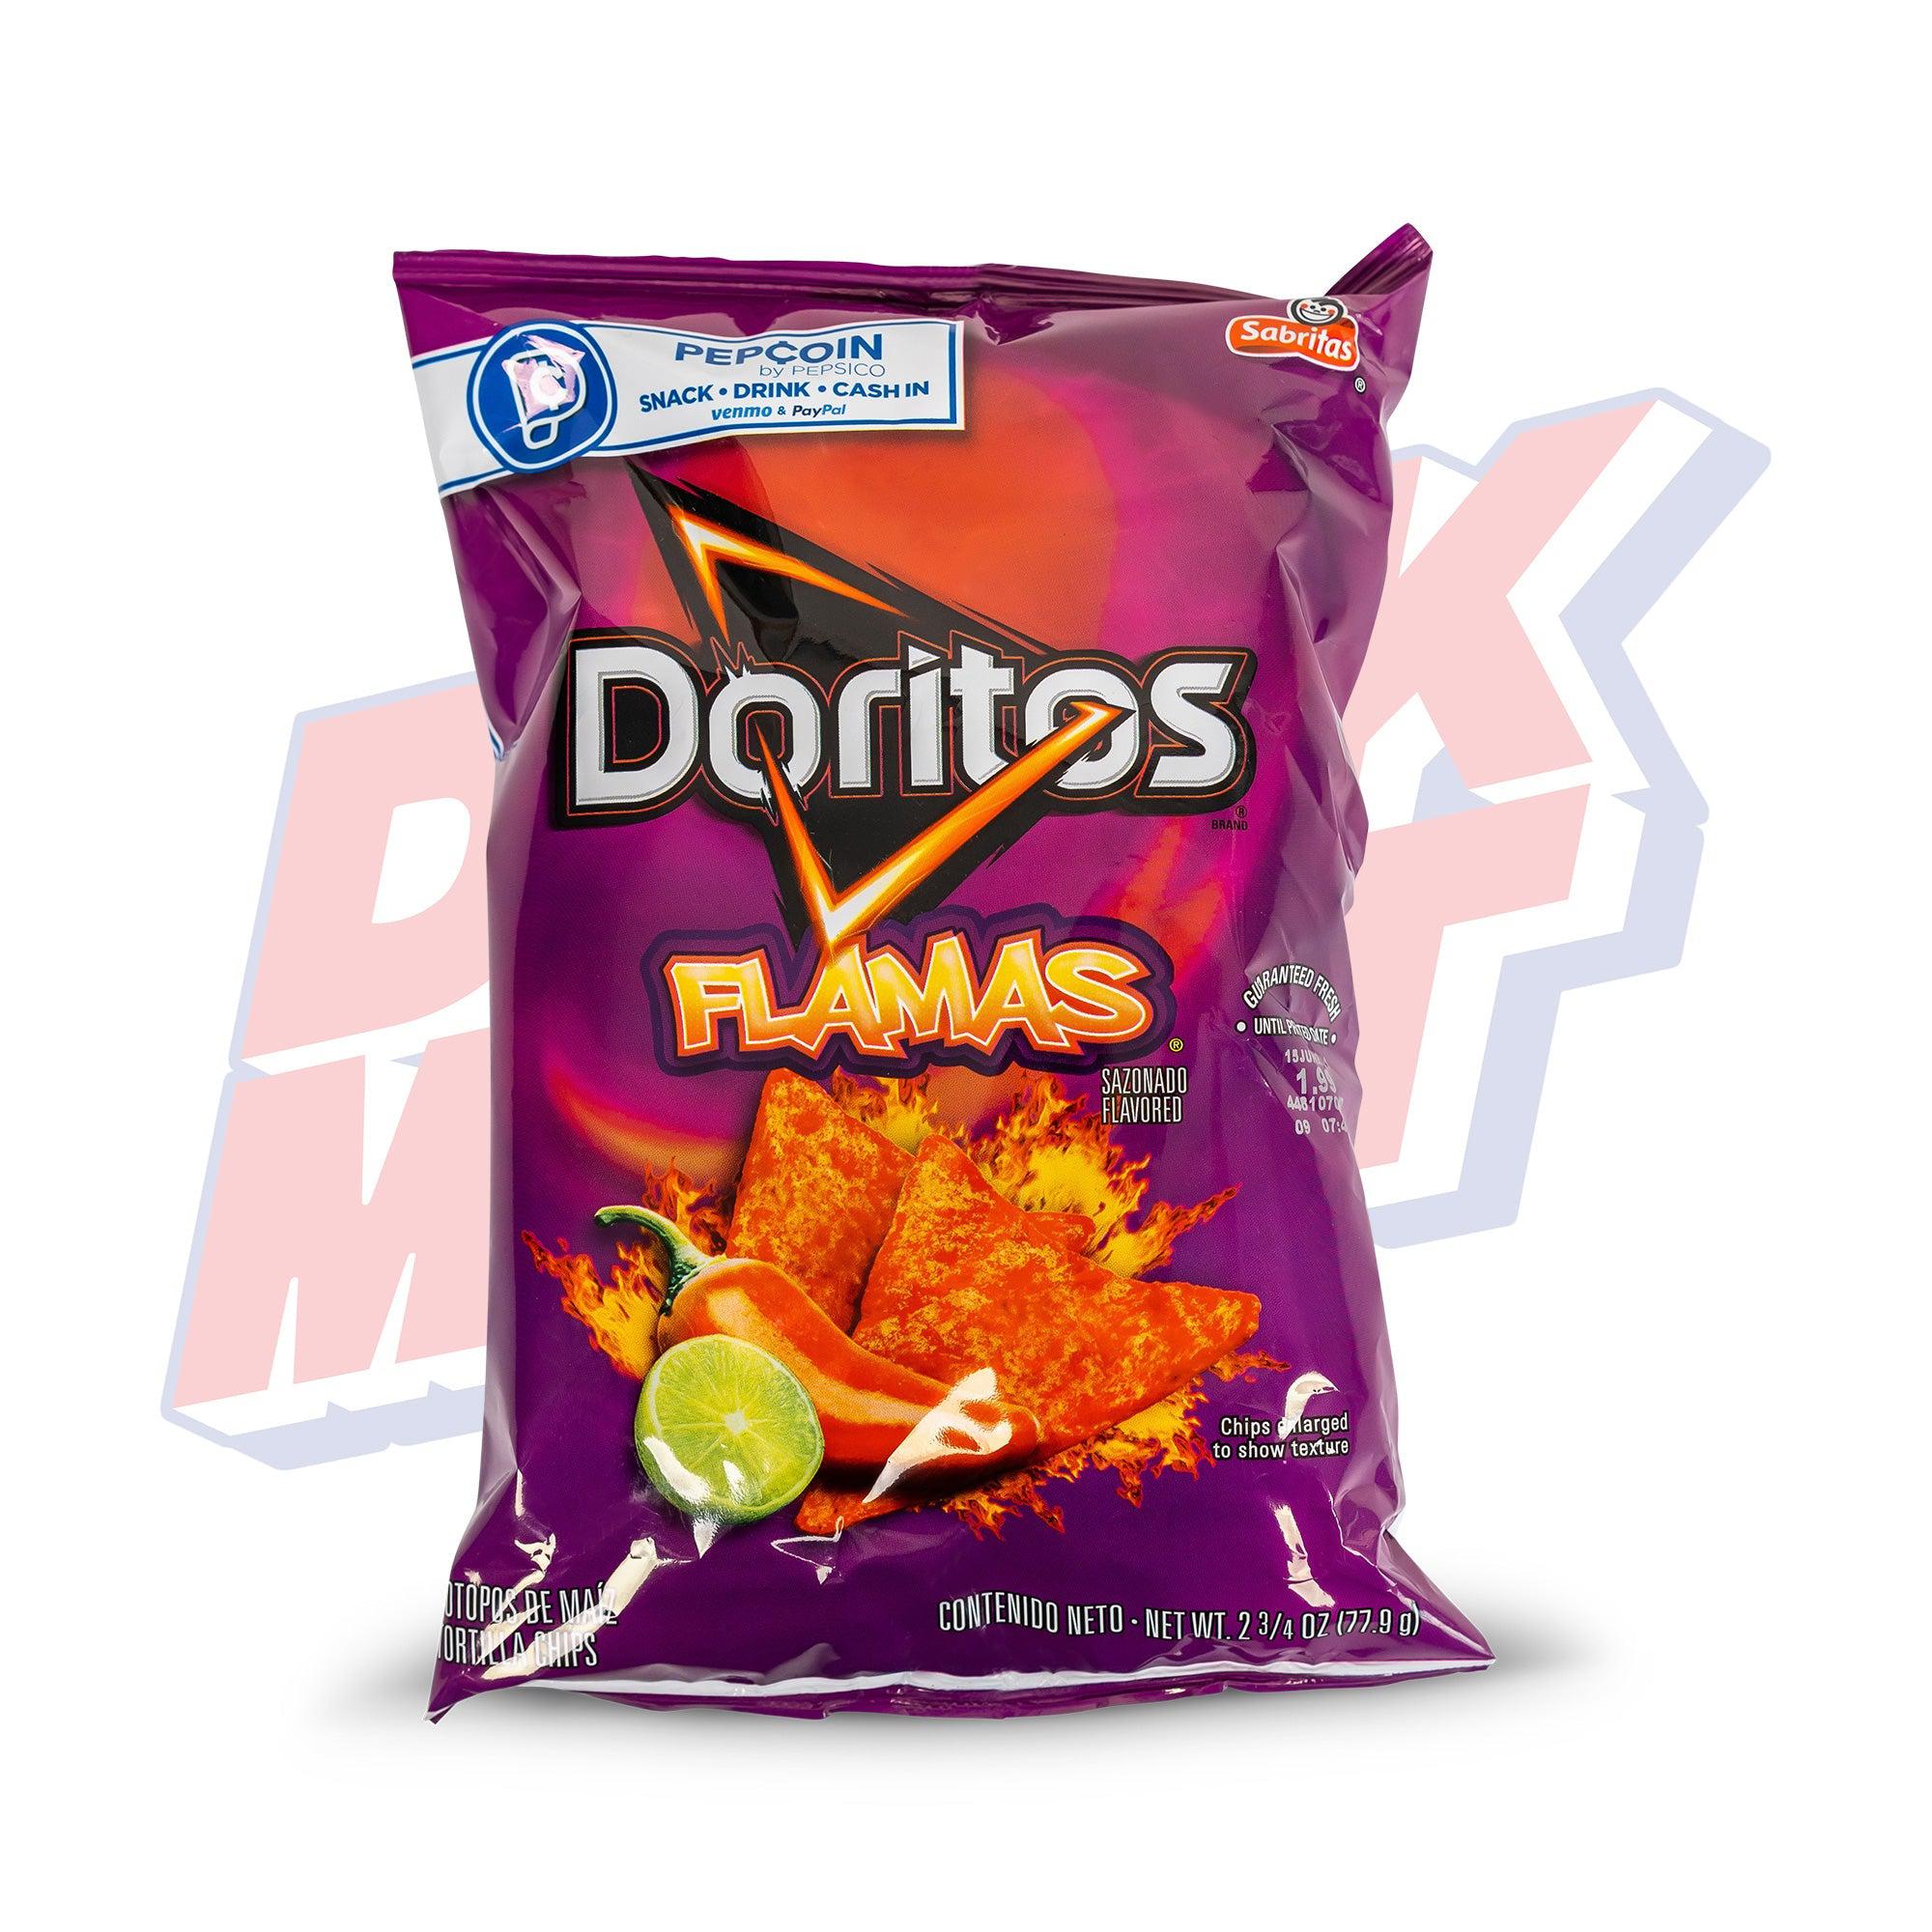 Doritos Flamas - 2.75oz